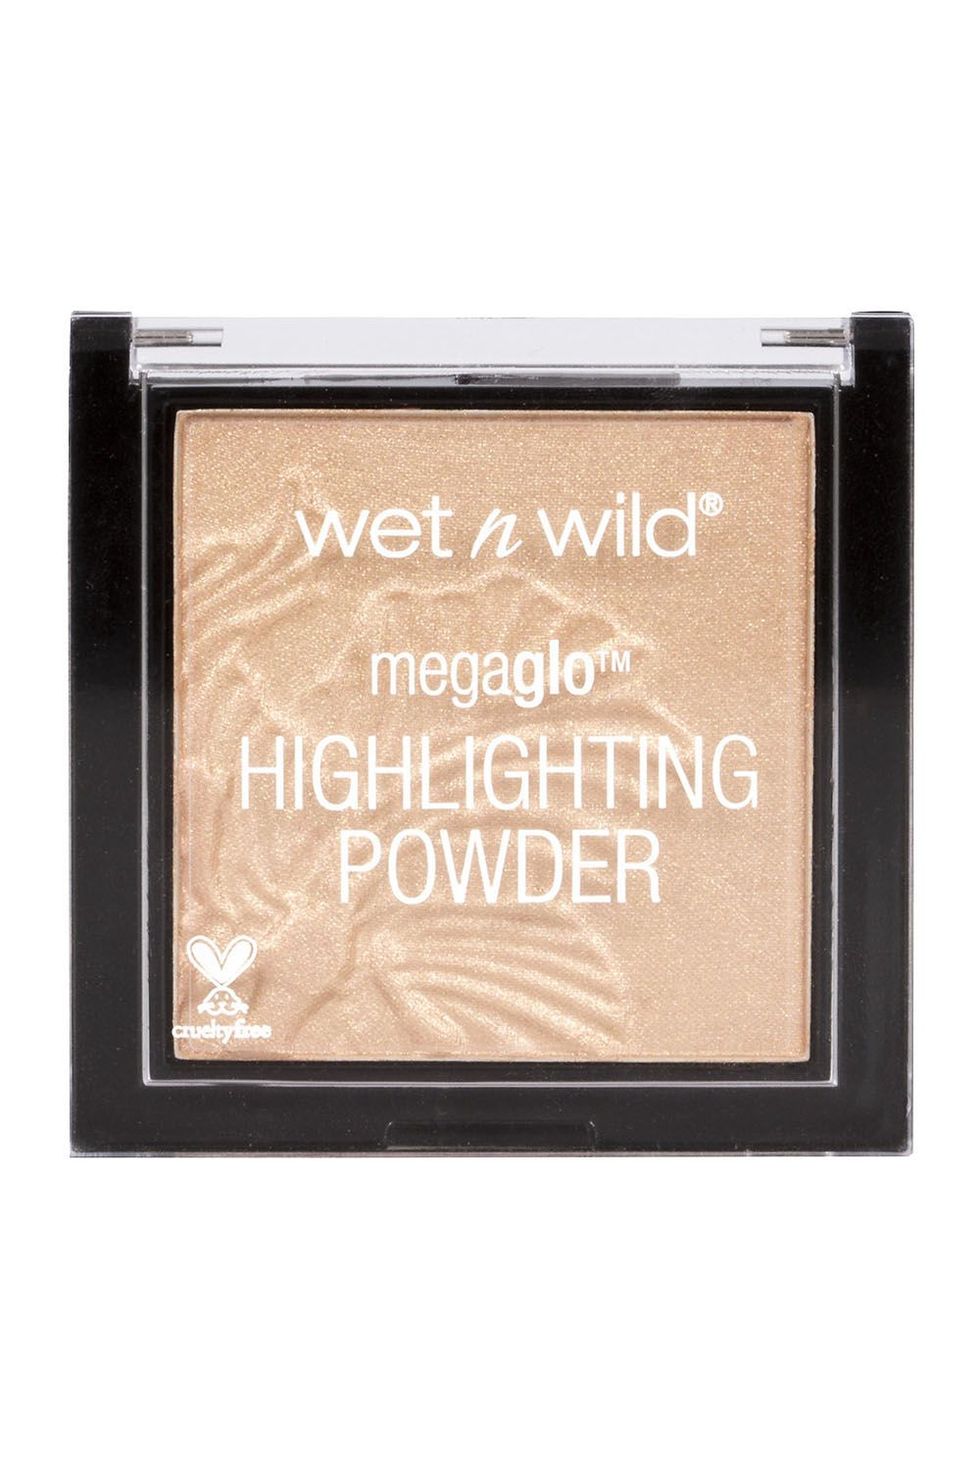 Wet ’n Wild MegaGlo Highlighting Powder